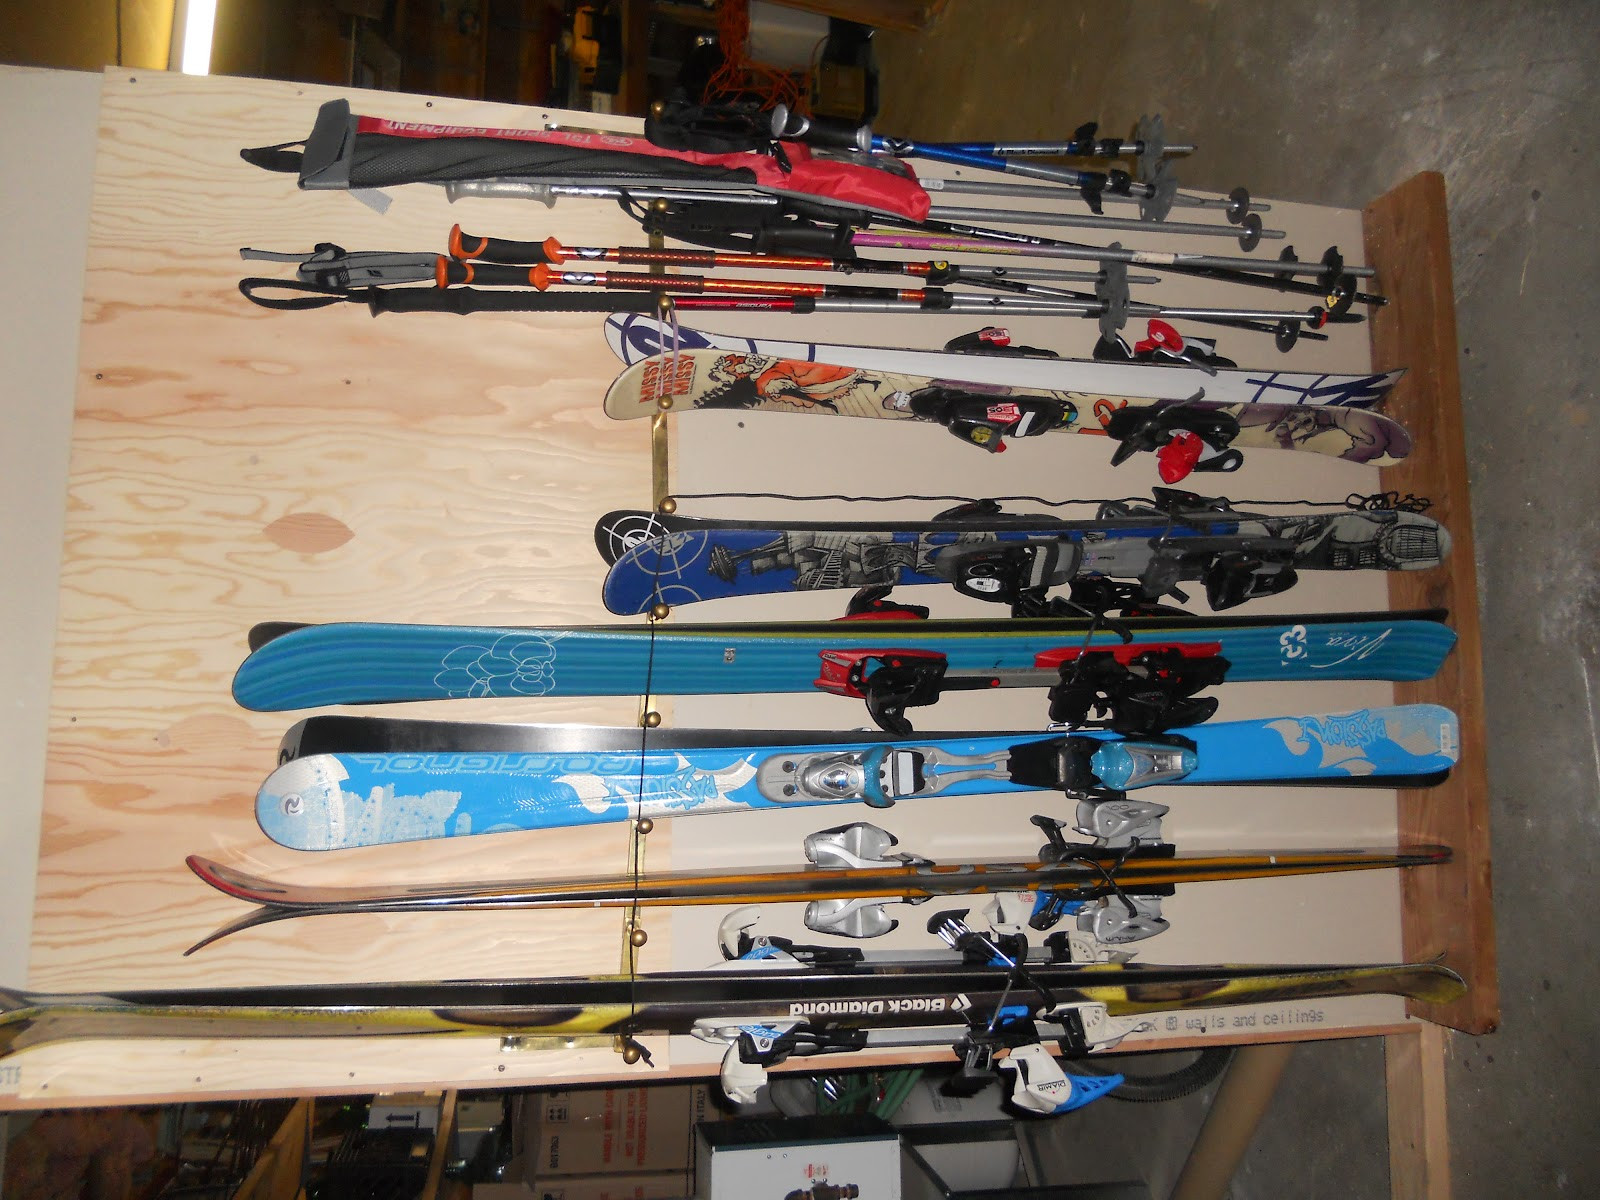 Best ideas about DIY Ski Racks
. Save or Pin Daily Dose of Douglet POS DIY Ski Rack Now.